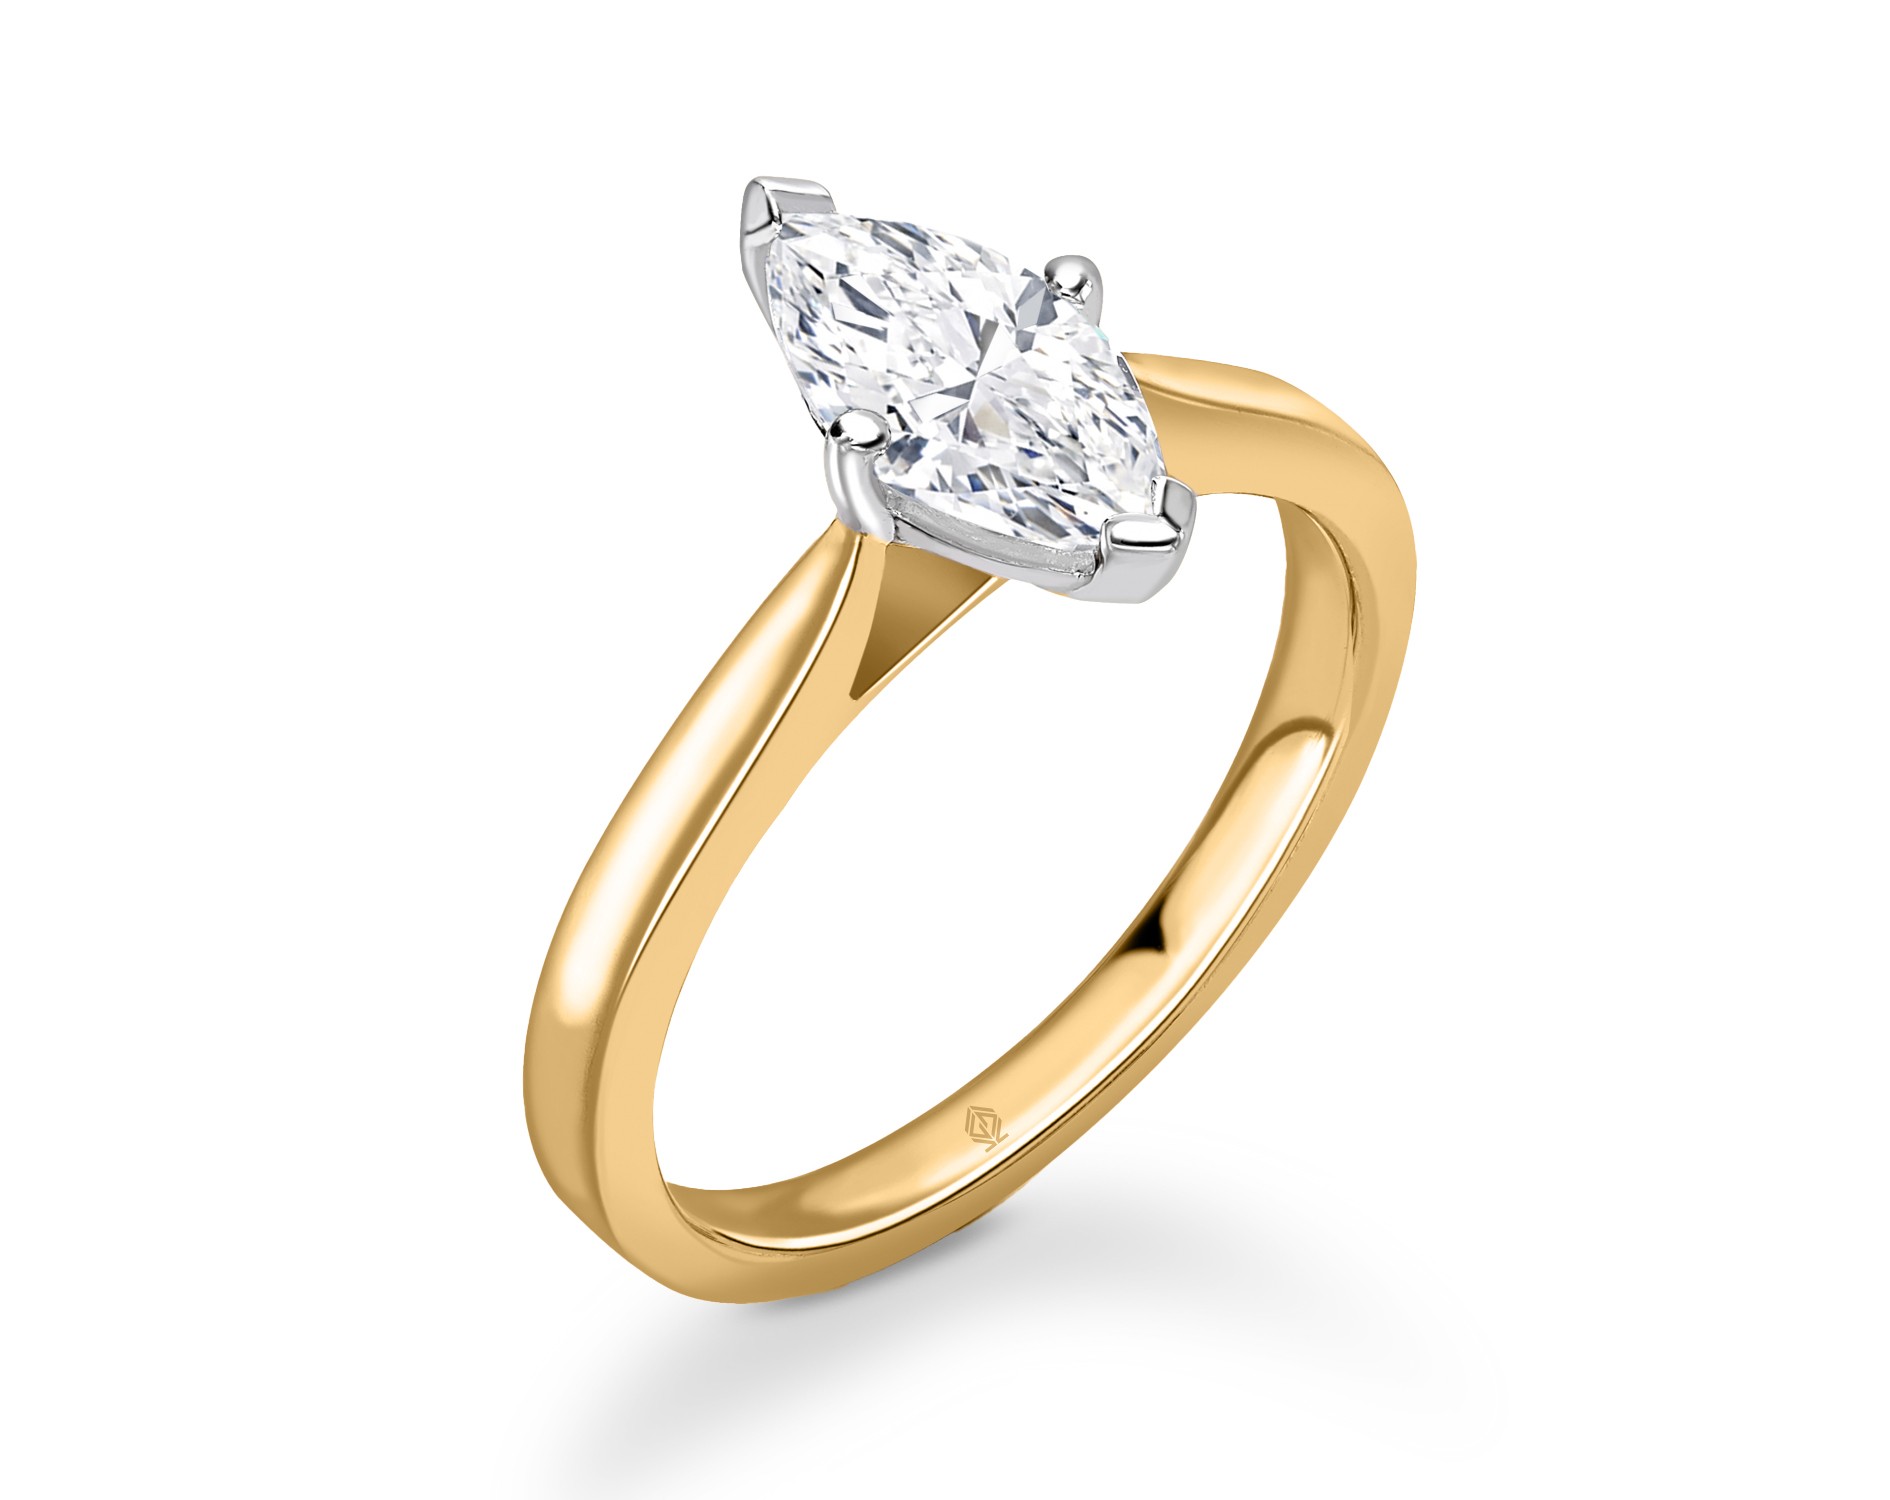 DUAL-TONE 4 PRONGS MARQUISE CUT DIAMOND ENGAGEMENT RING